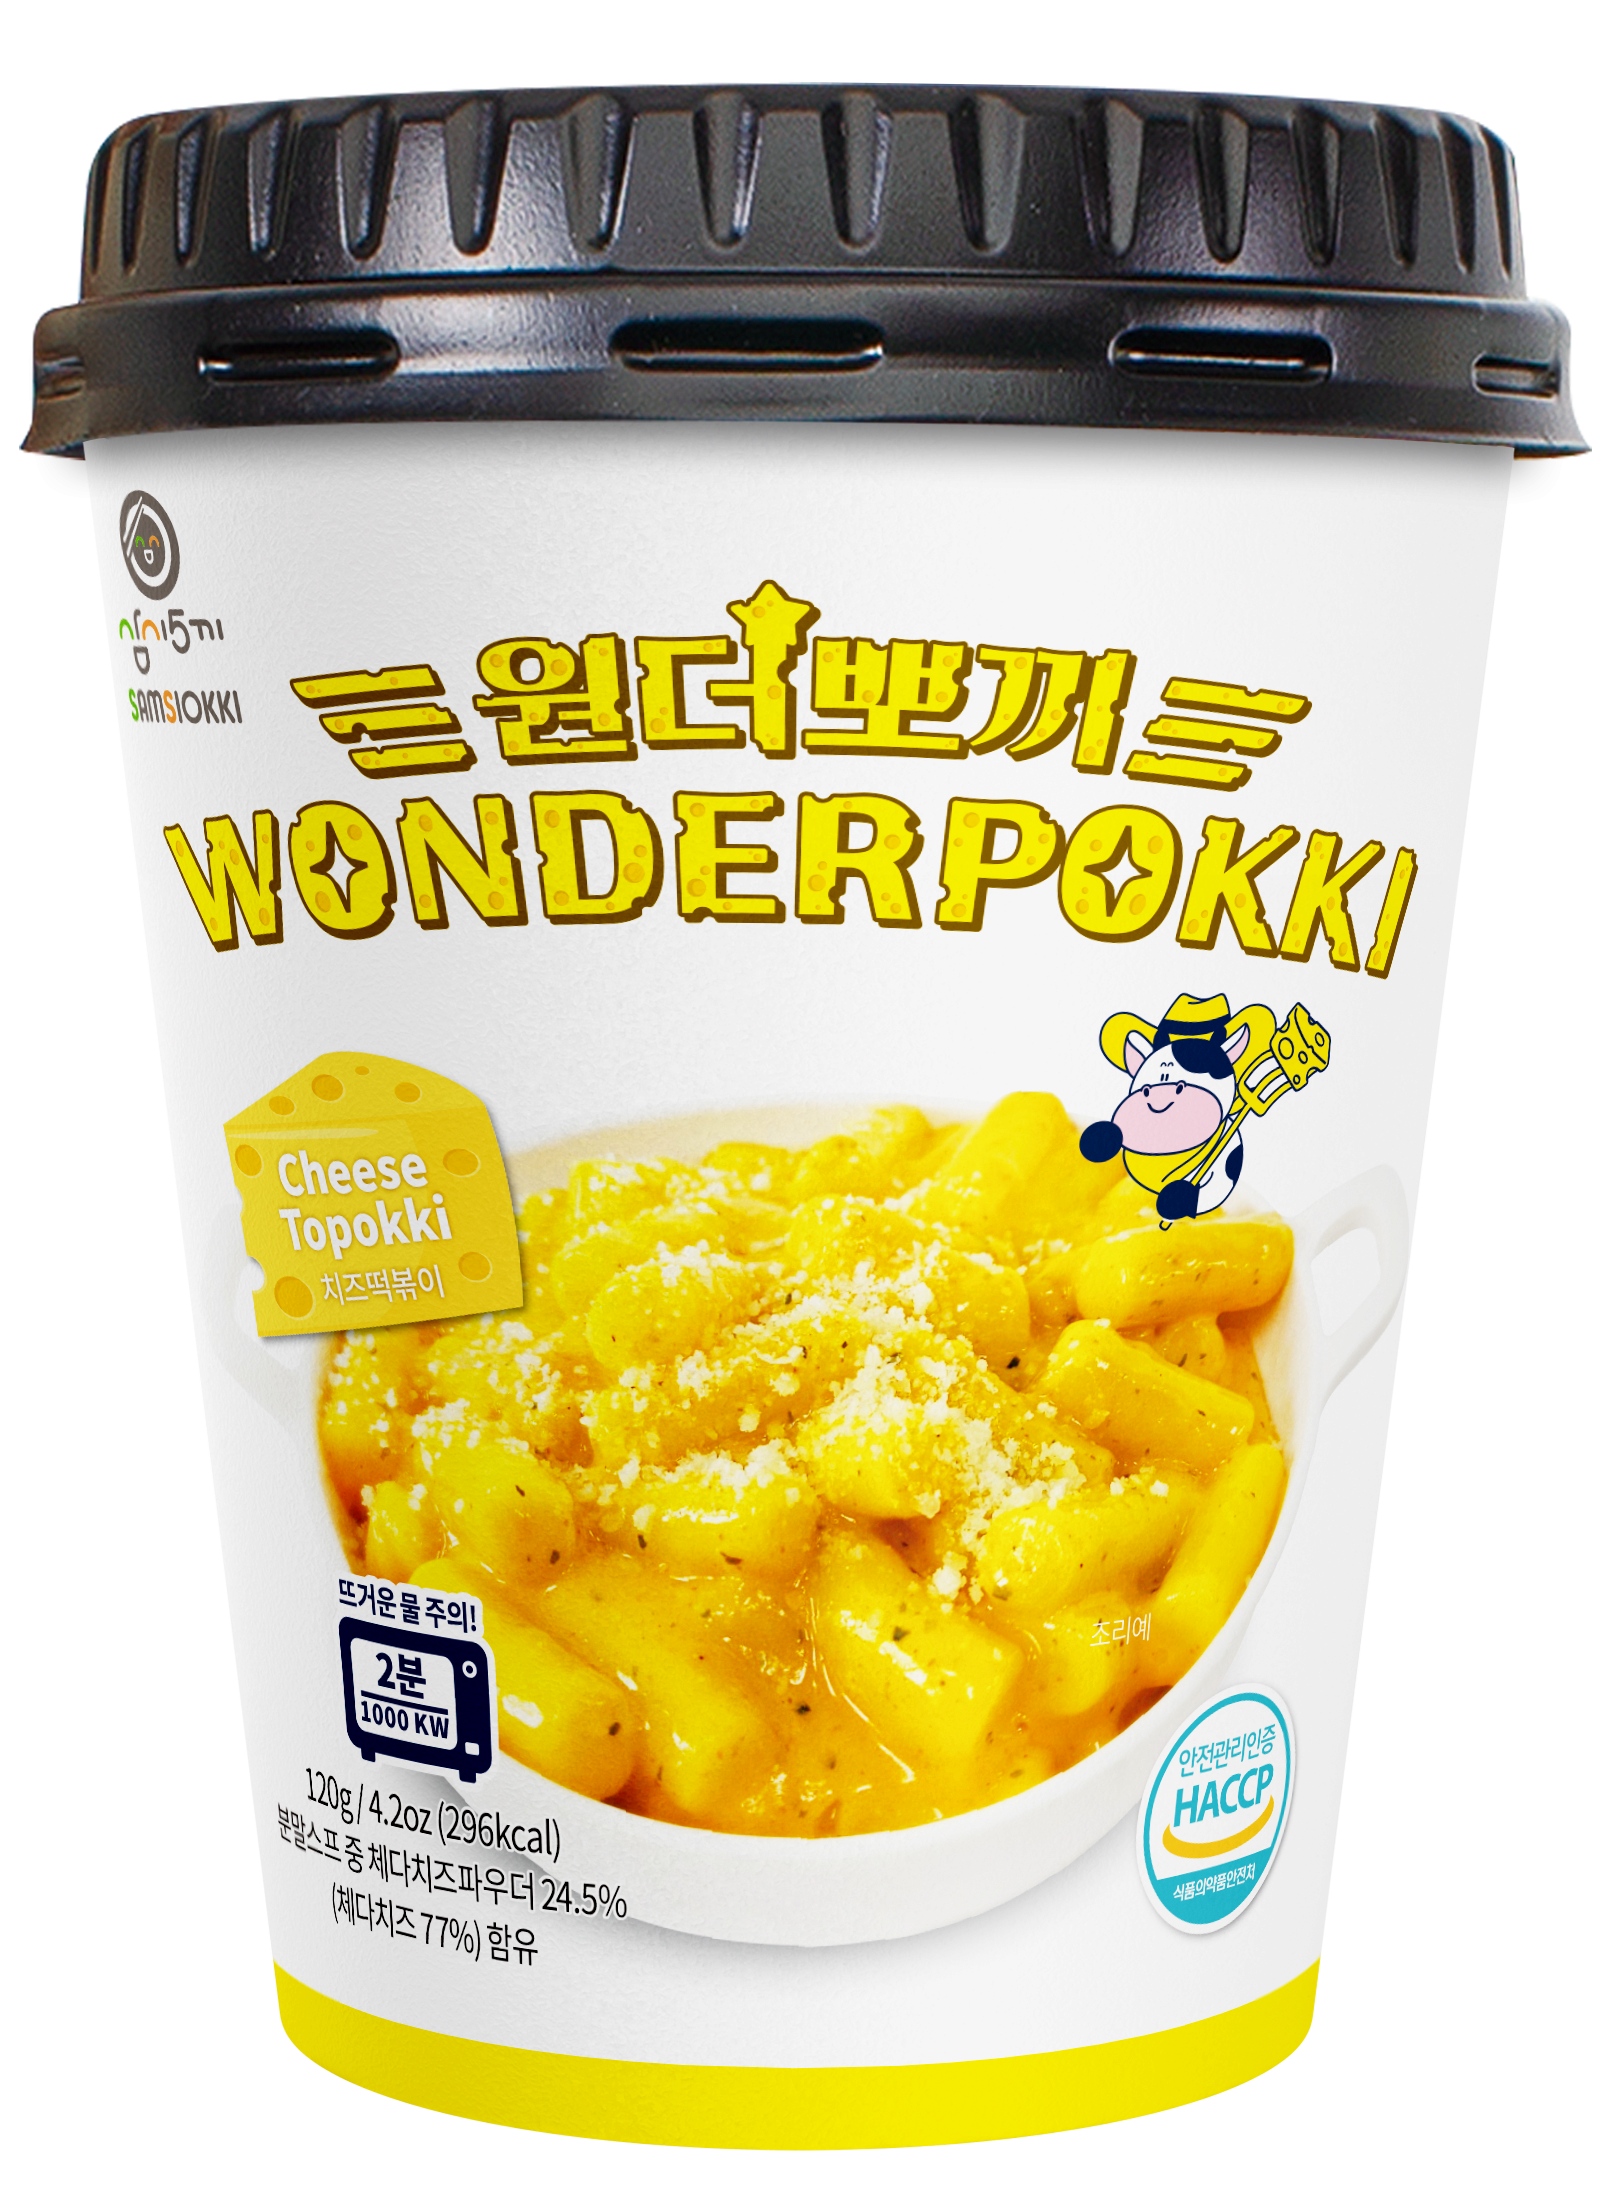 Wonderpokki Cheese Topokki